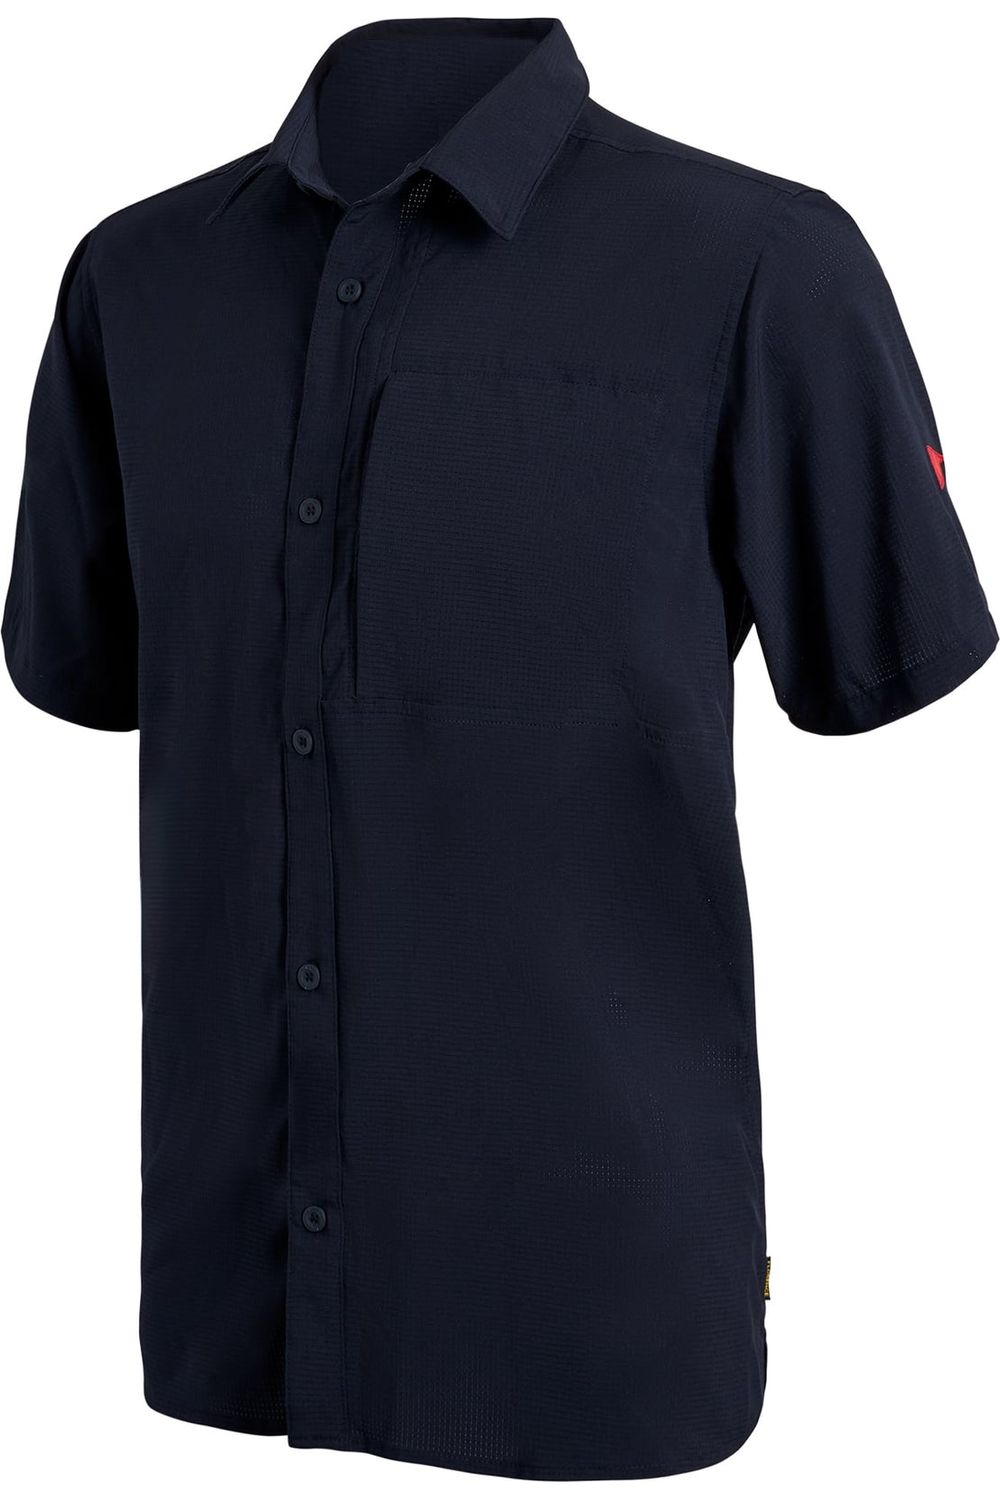 Florence Marine X Airtex Expedition Short Sleeve Shirt Department Navy